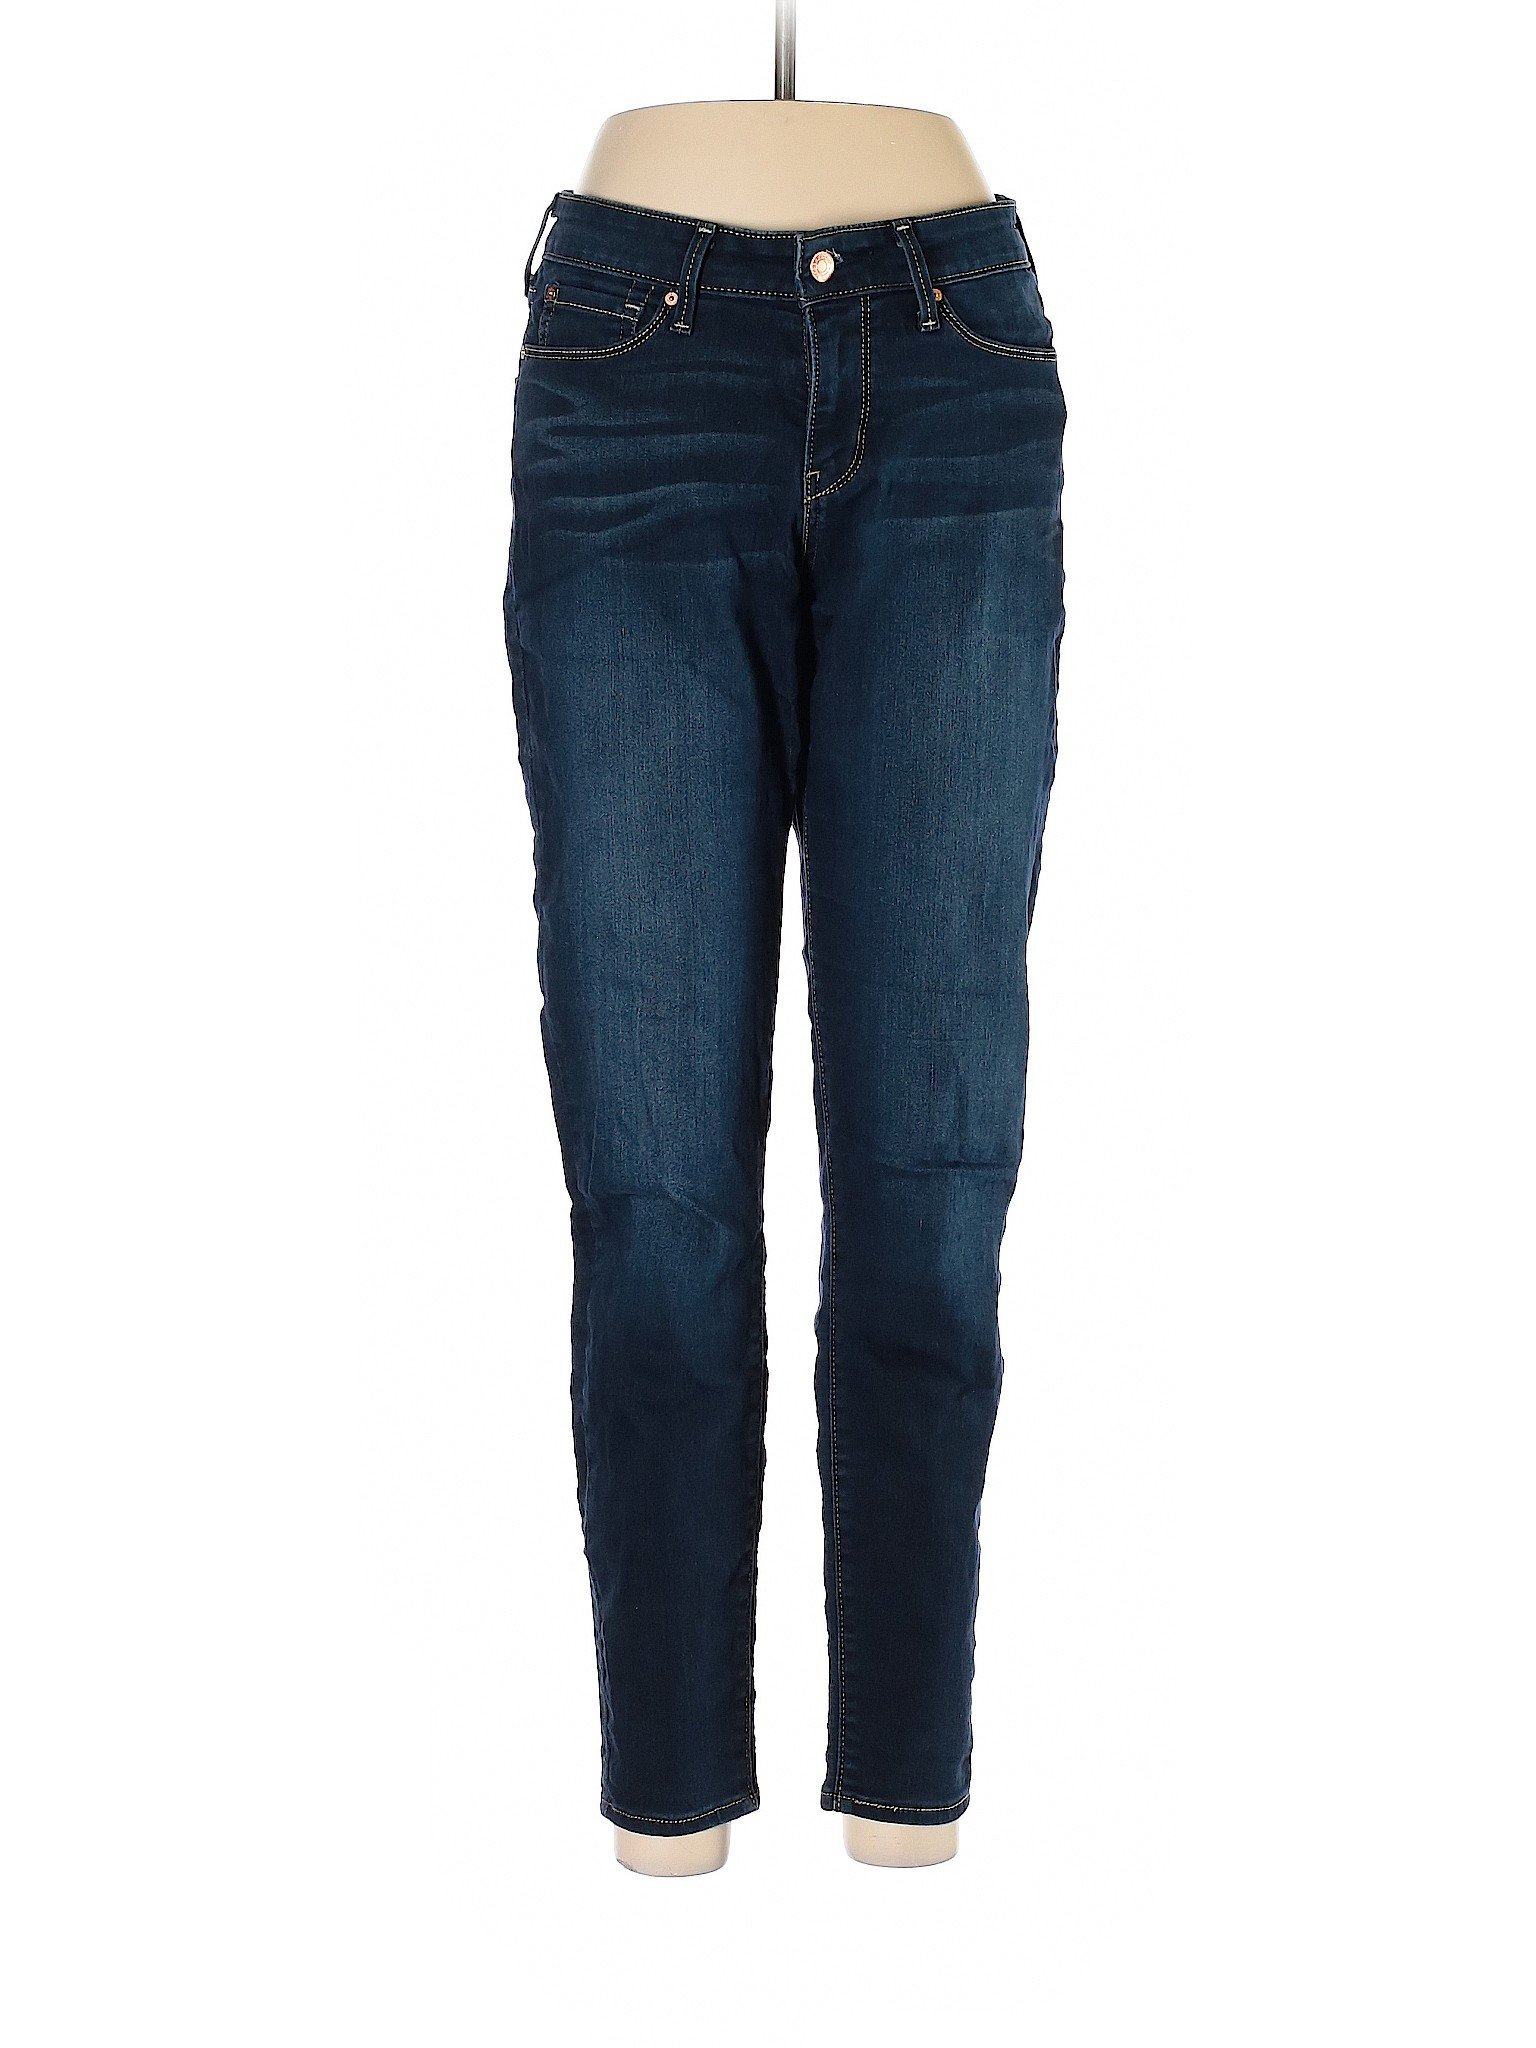 Levi Strauss Signature Women Blue Jeans 28W | eBay